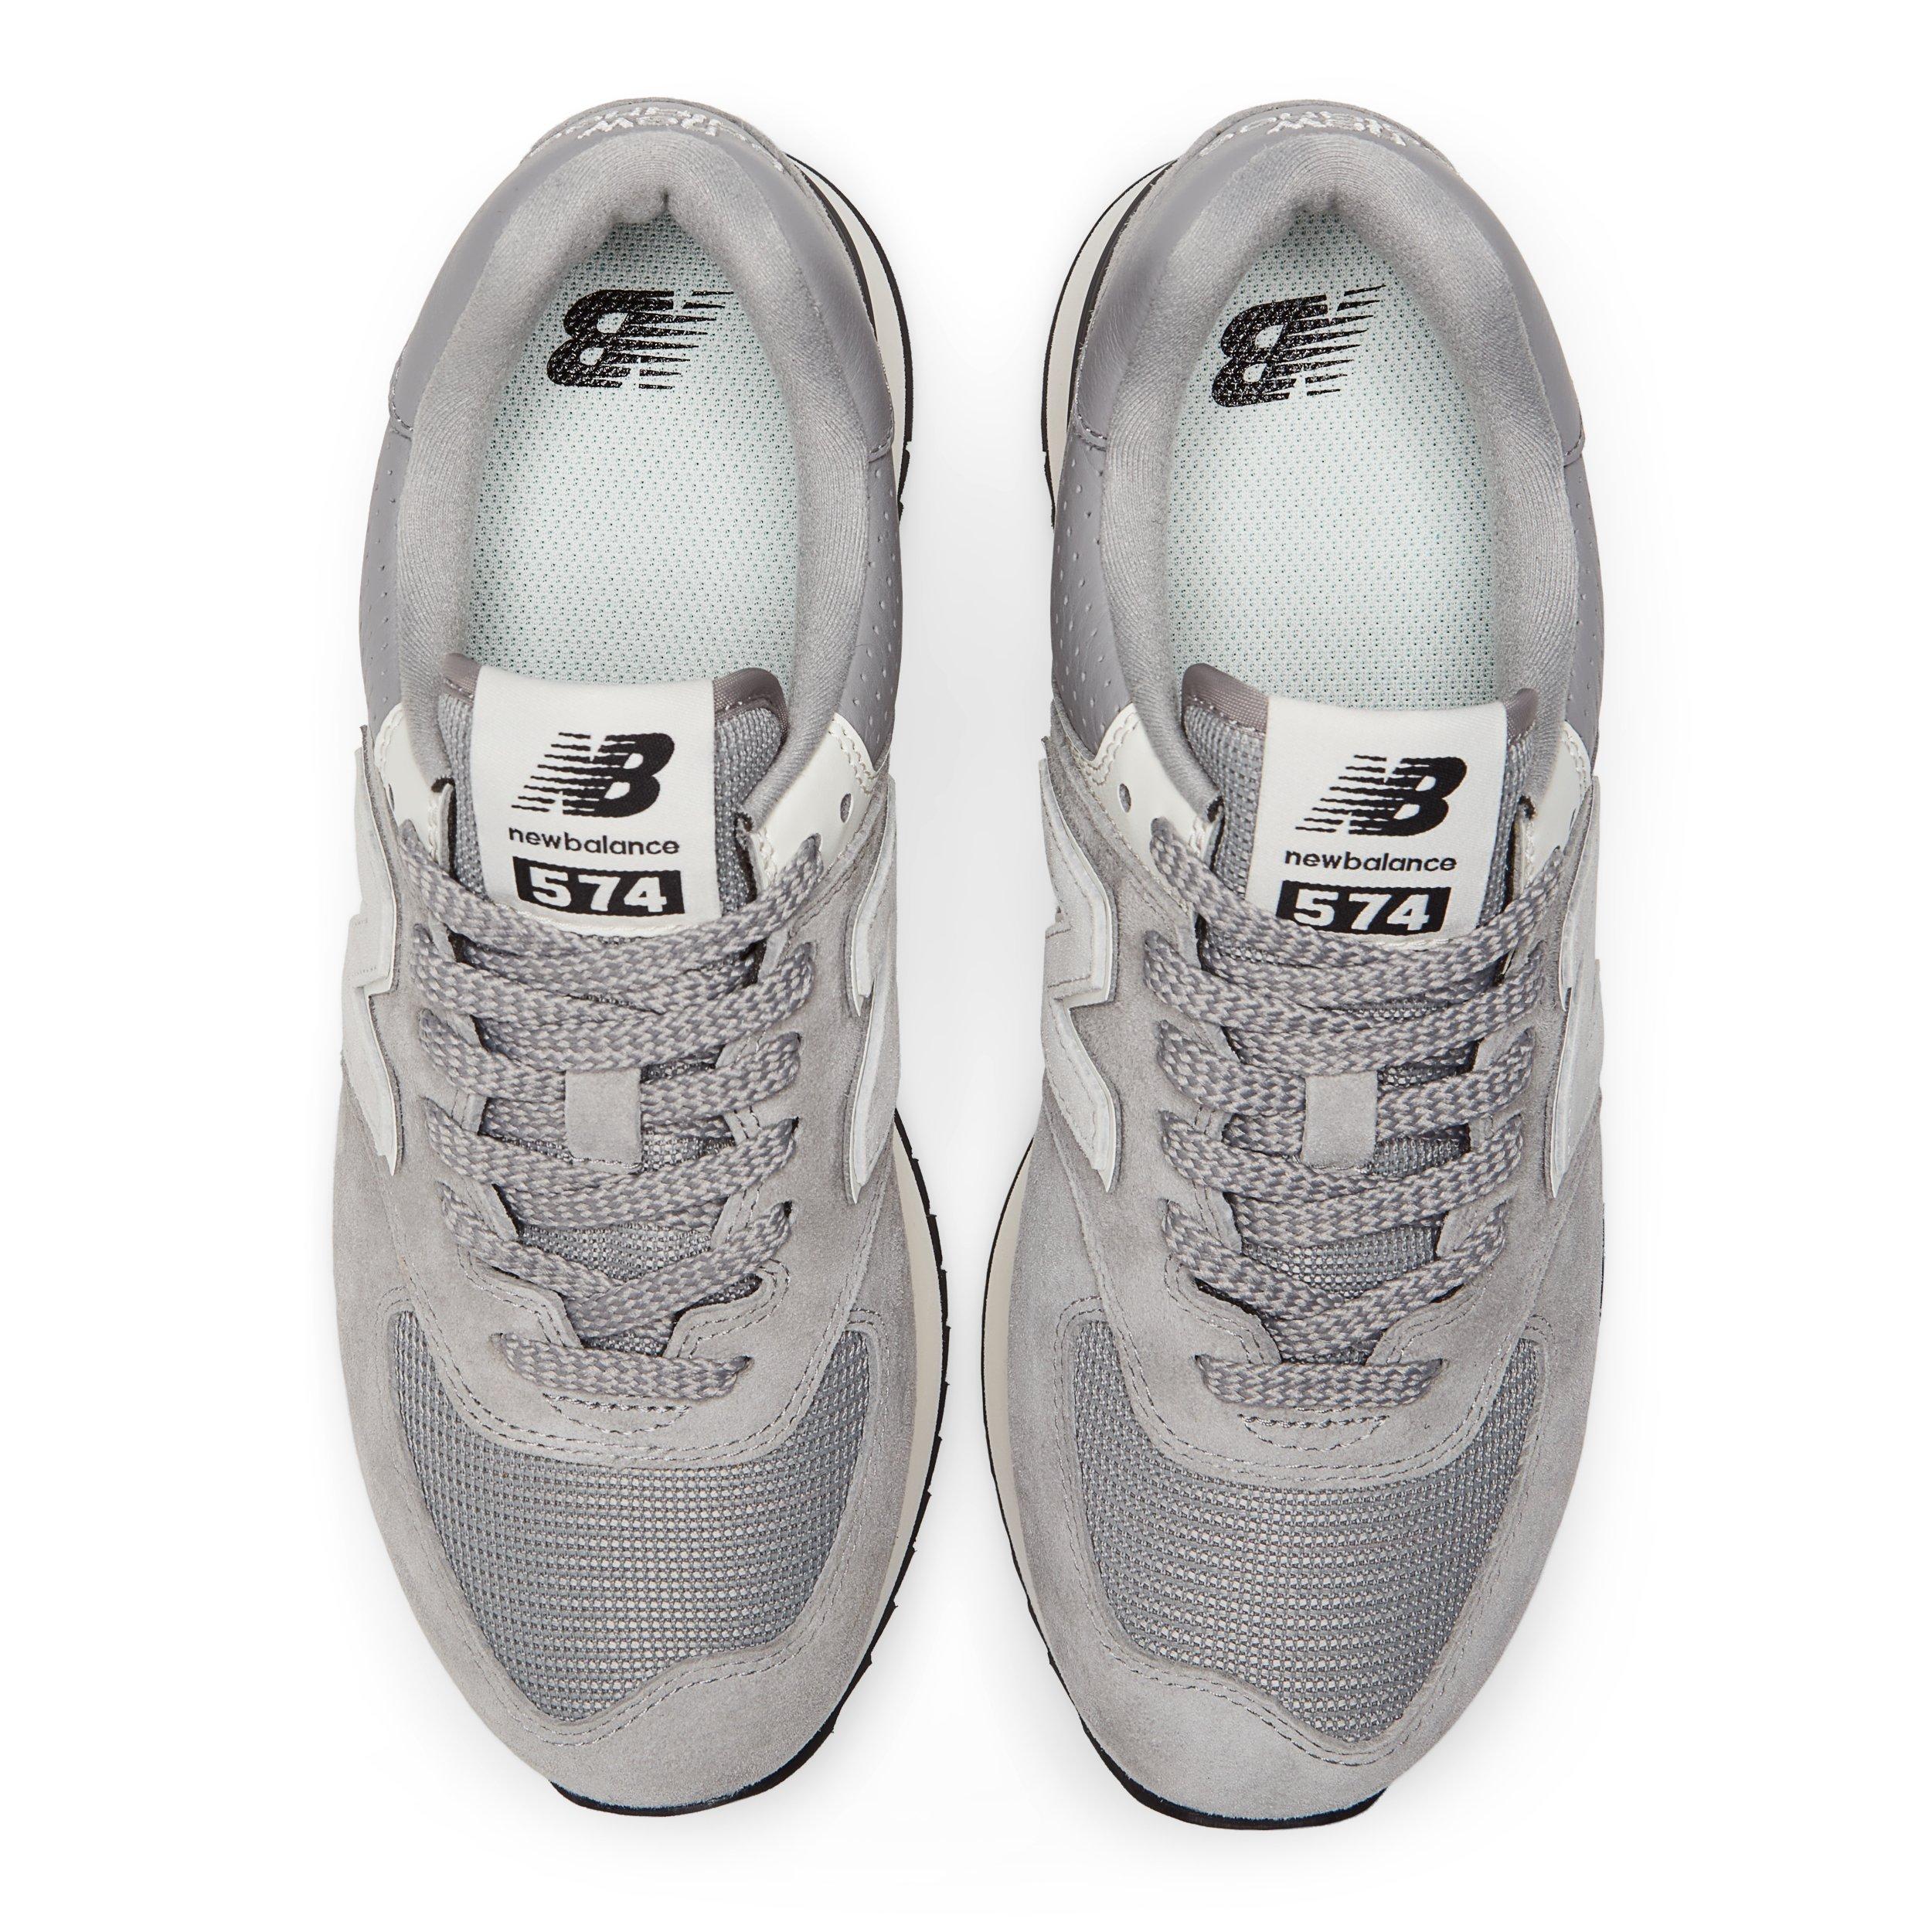 Balance 574 Stacked "Grey/White" Women's Shoe